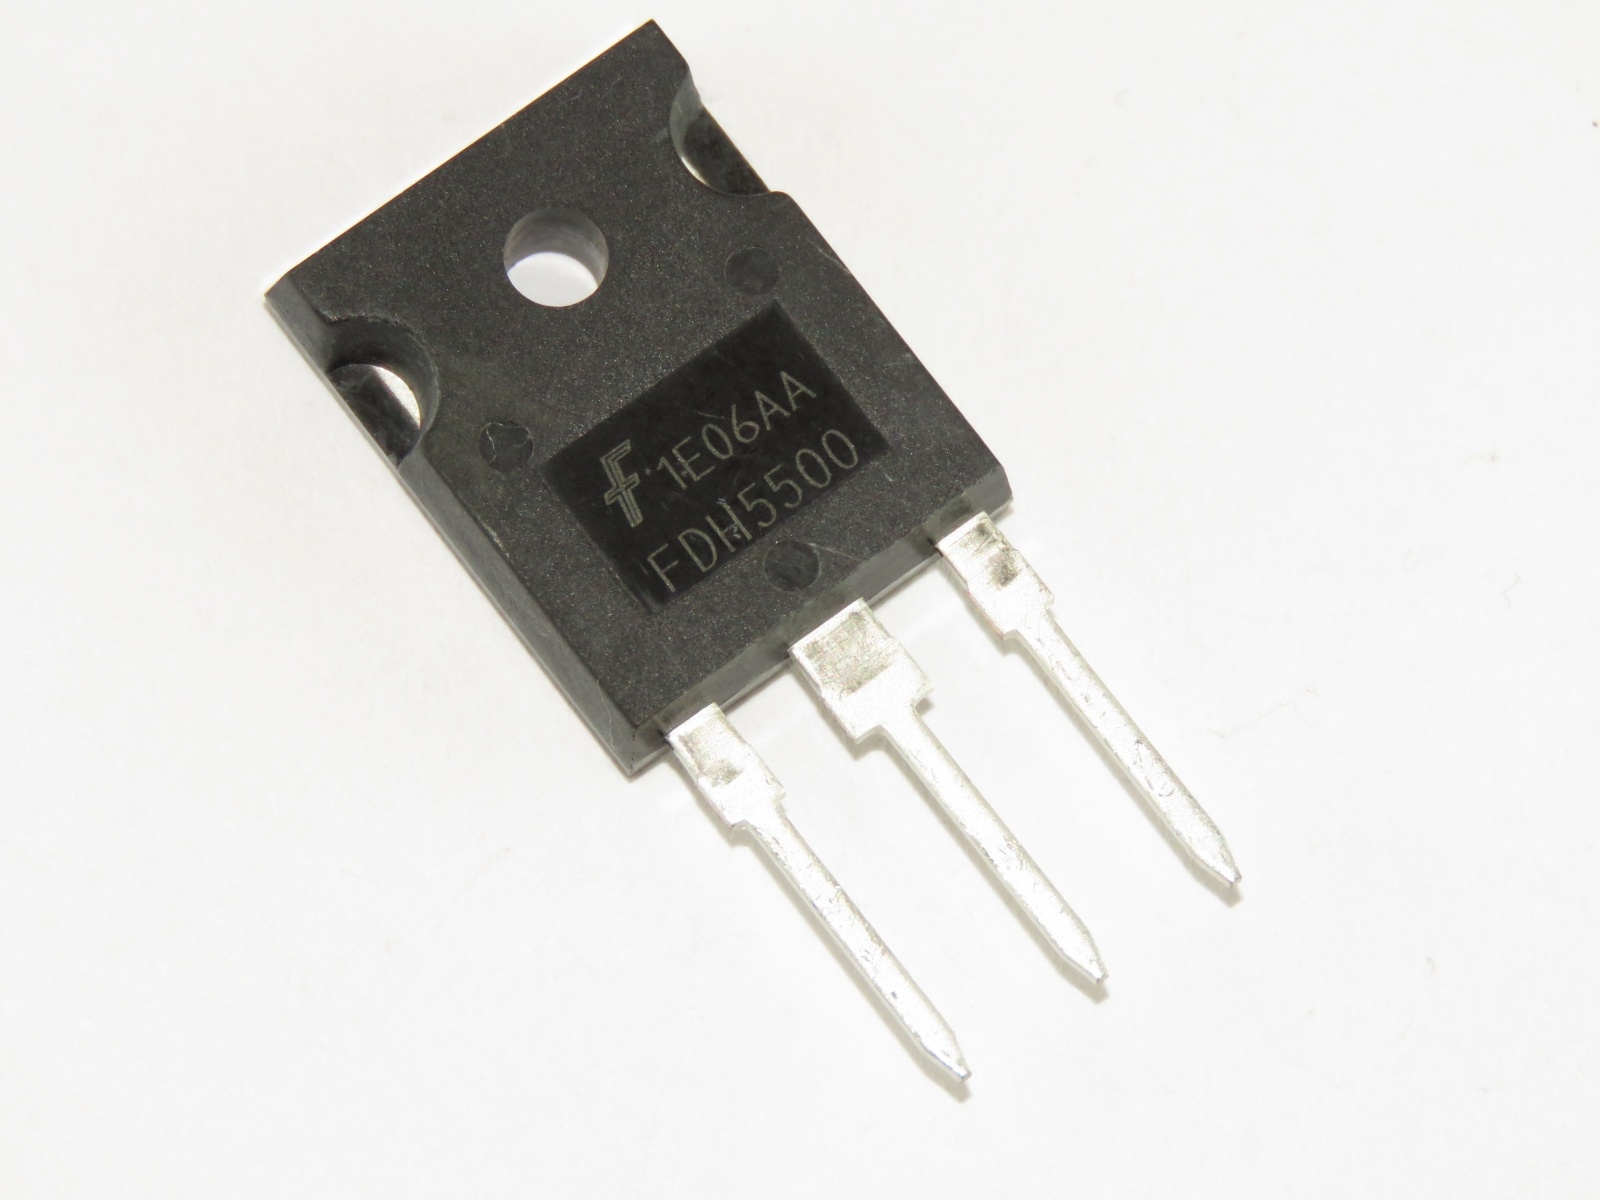 Transistor FDH5500